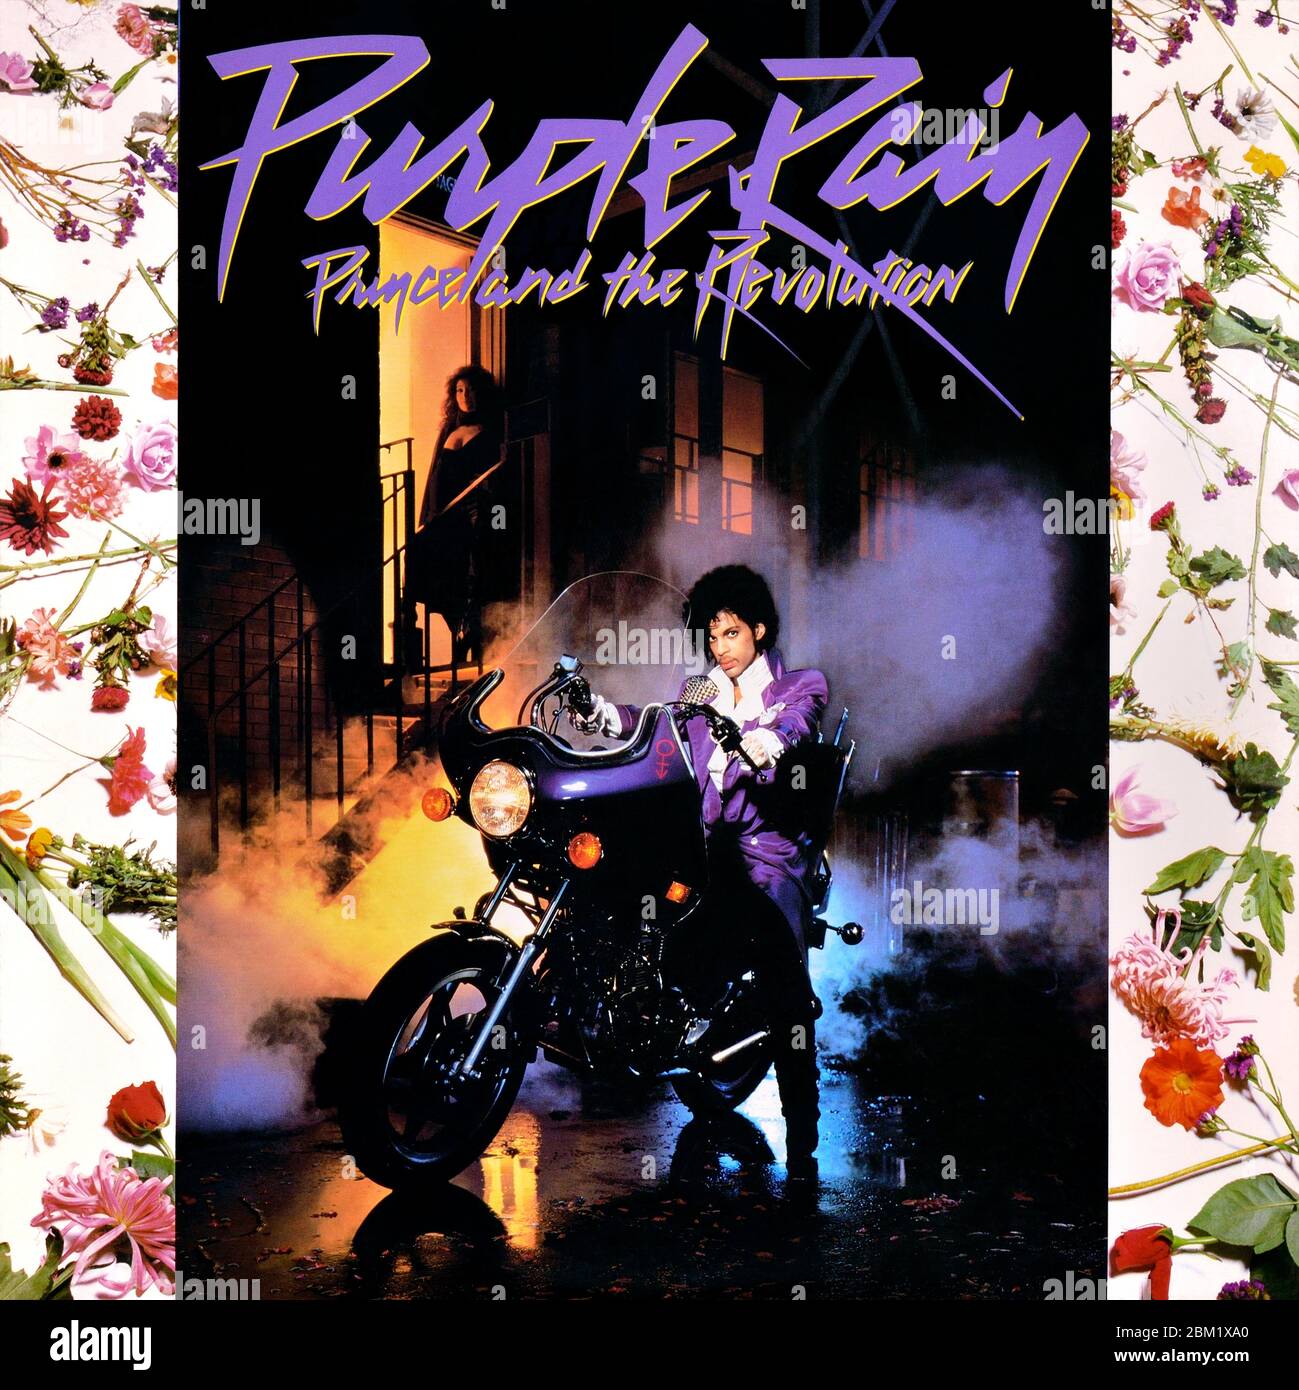 Prince and the Revolution - original Vinyl Album Cover - Midnight Moonlight - 1984 Stockfoto